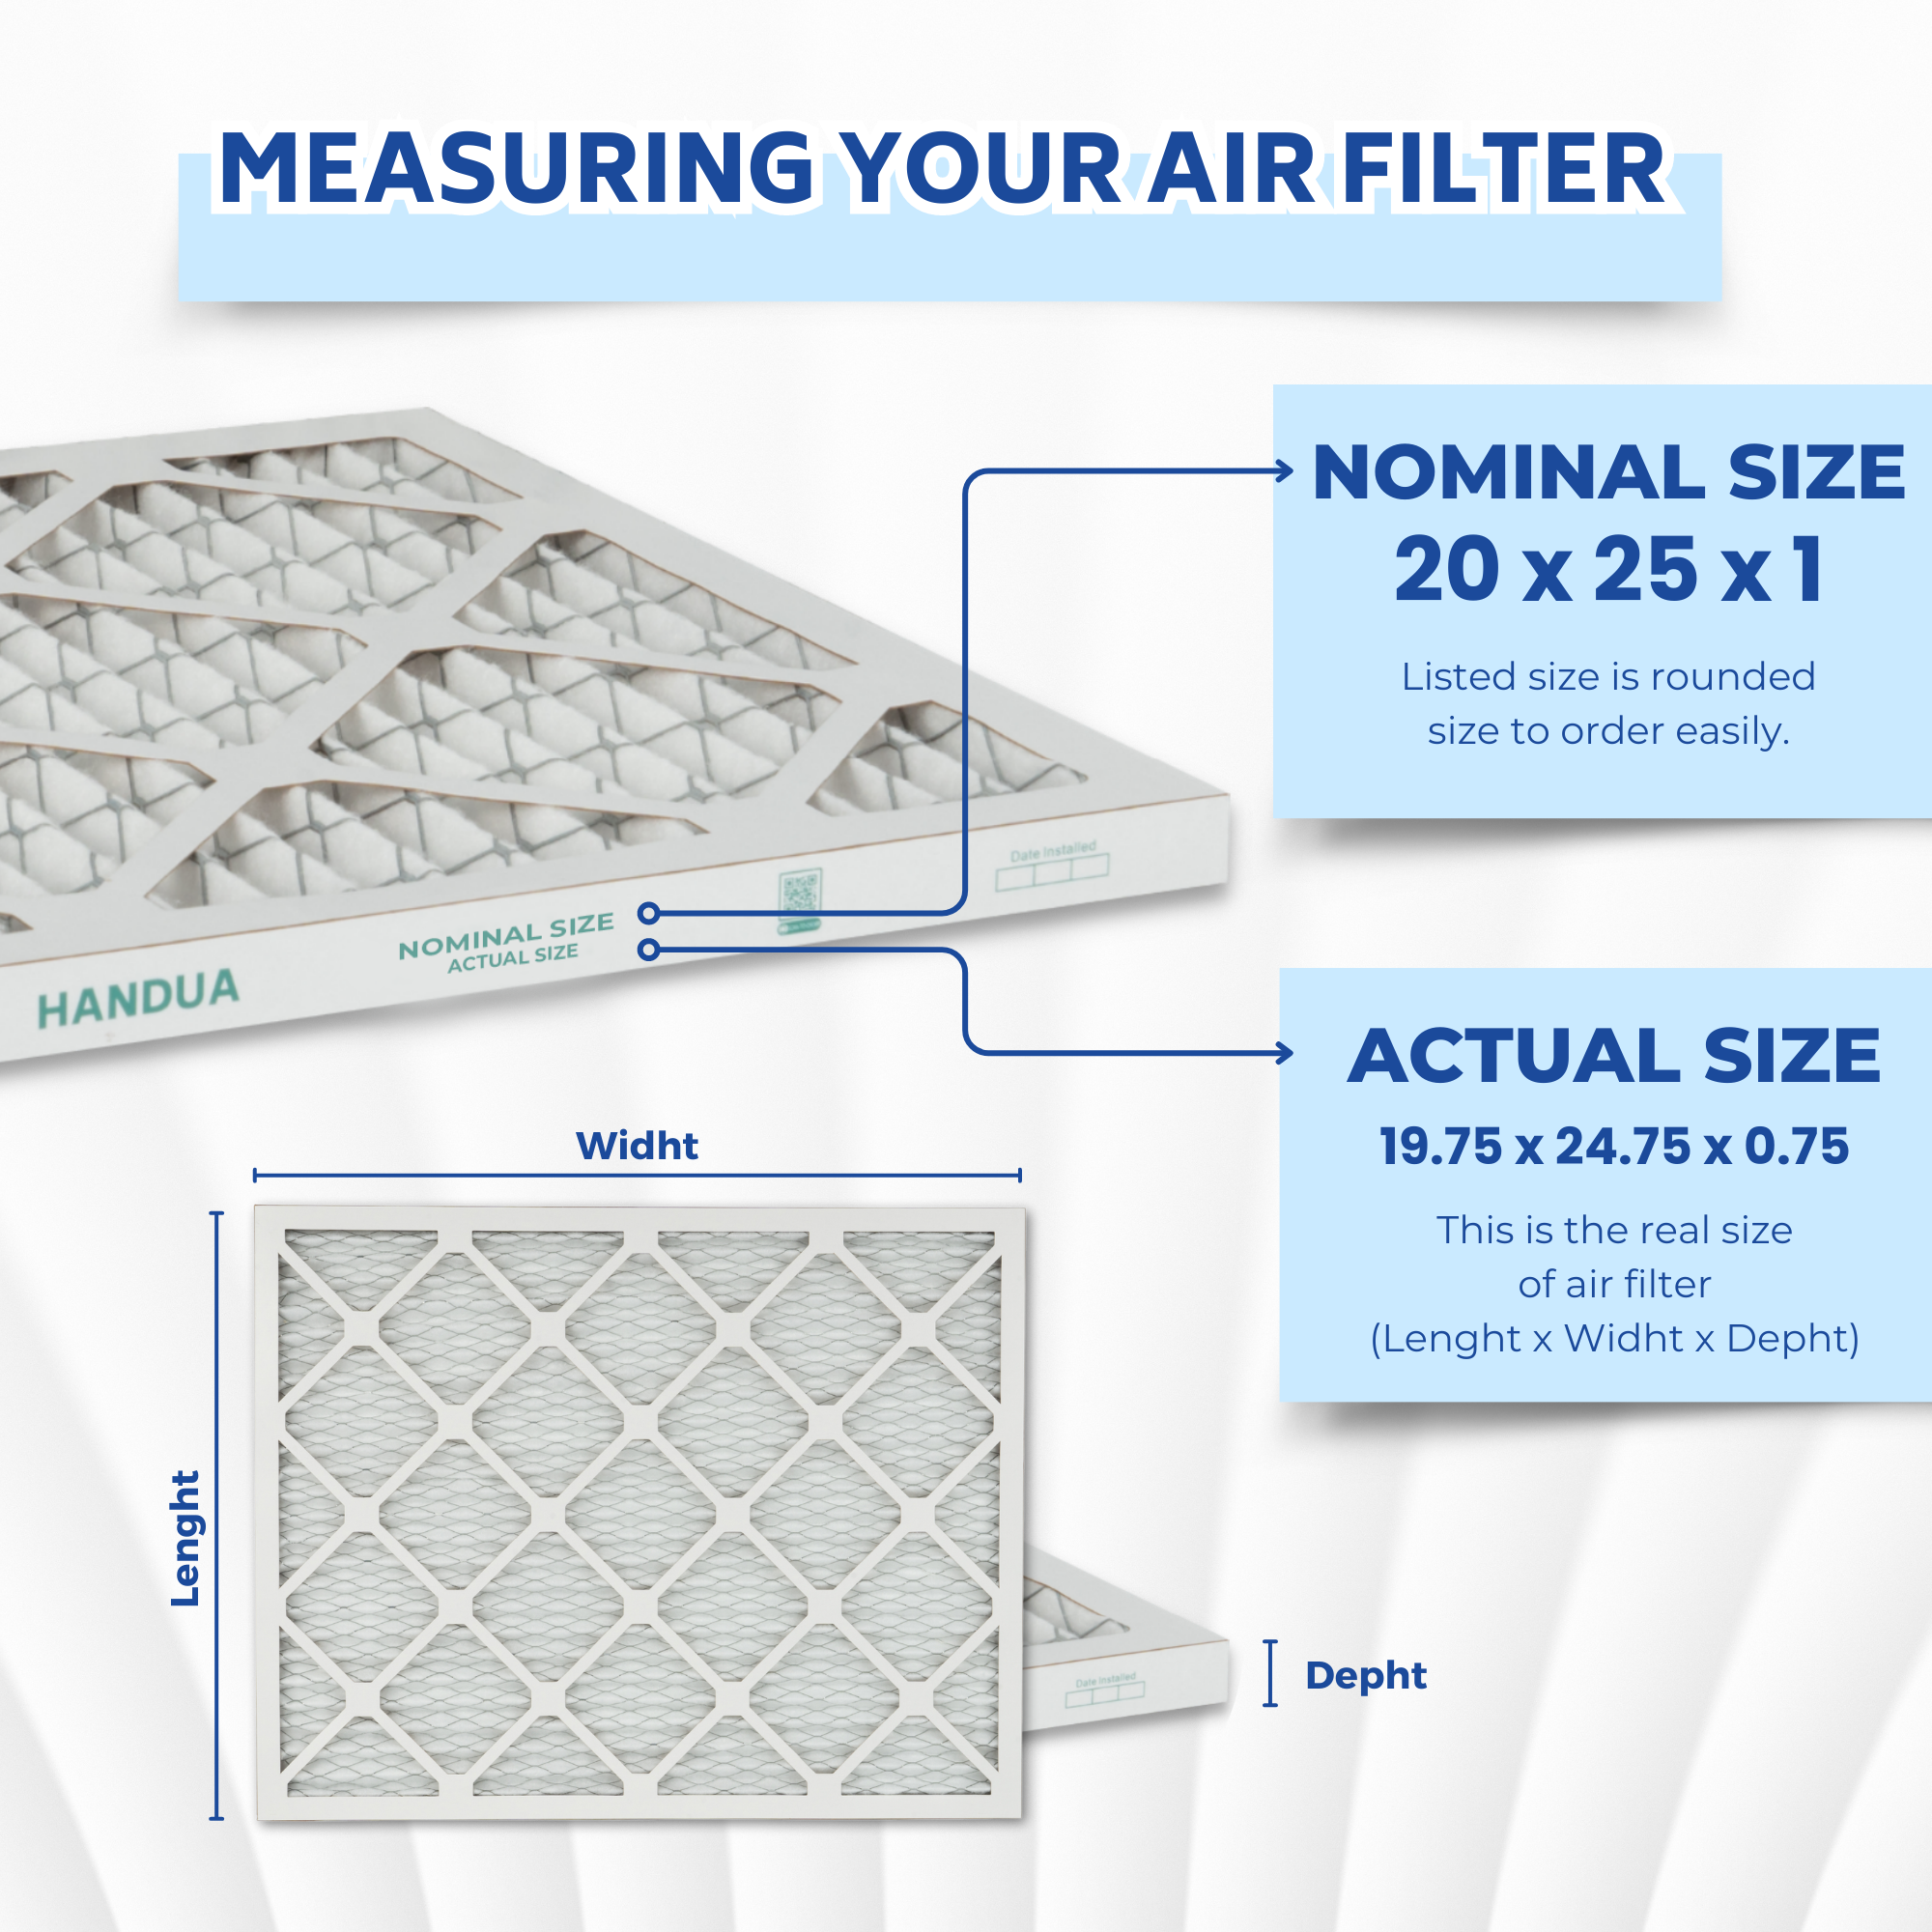 Handua 20x25x1 Air Filter MERV 11 Allergen Control, Plated Furnace AC Air Replacement Filter, 4 Pack (Actual Size: 19.75" x 24.75" x 0.75")